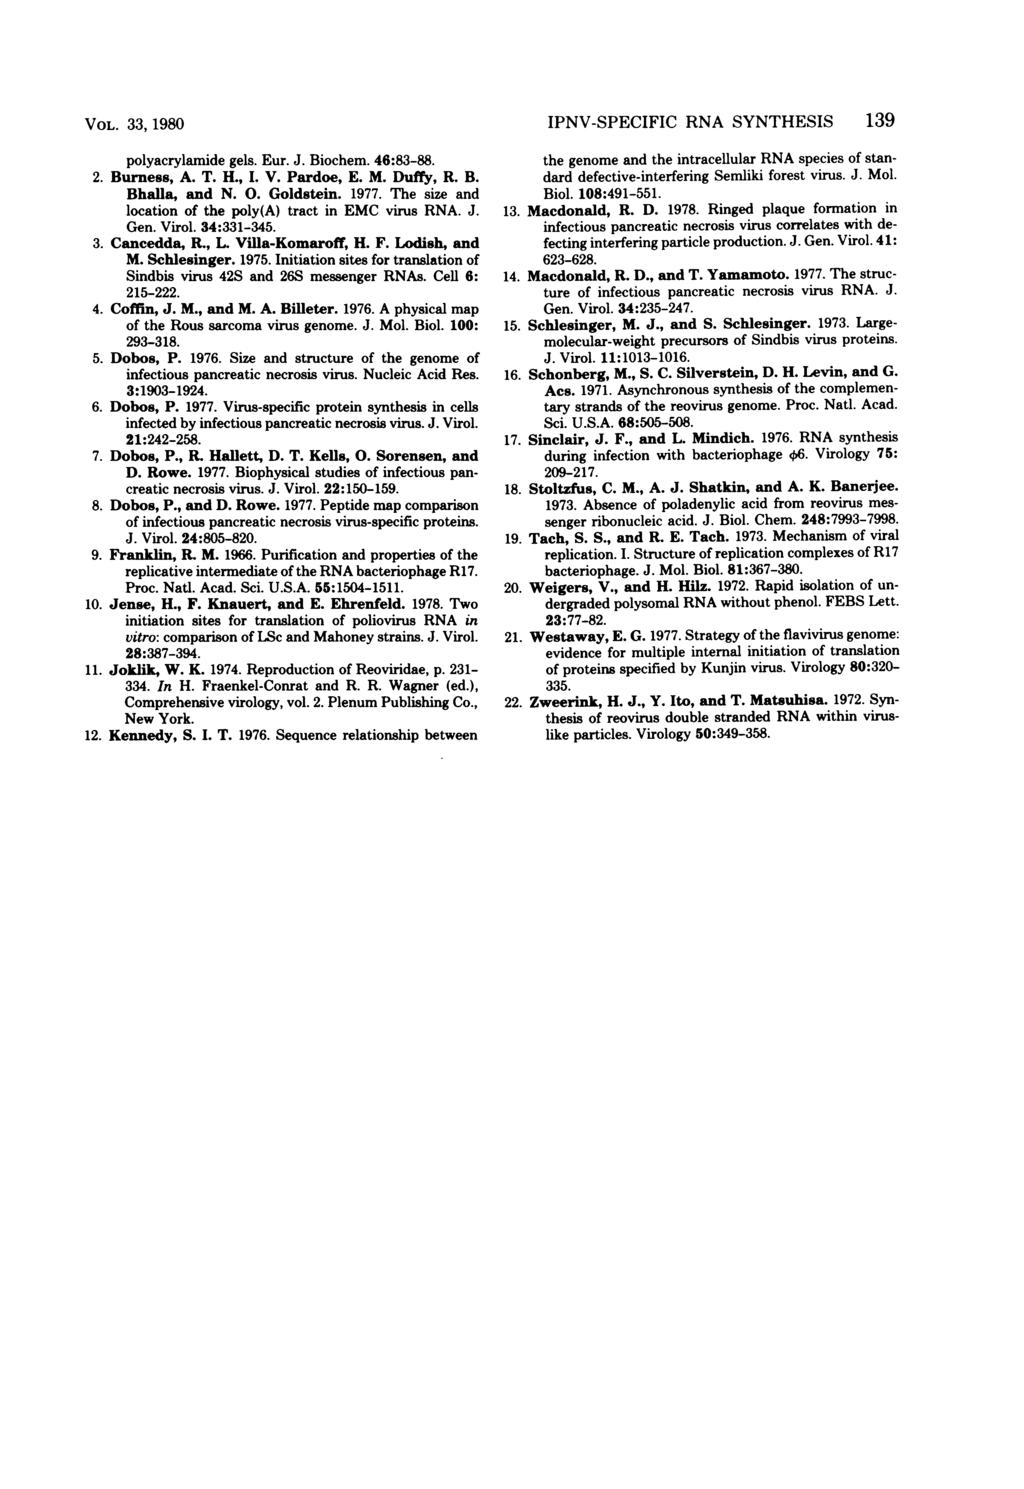 VOL. 33, 1980 polyacrylamide gels. Eur. J. Biochem. 46:83-88. 2. Burness, A. T. H., I. V. Pardoe, E. M. Duffy, R. B. Bhalla, and N. 0. Goldstein. 1977.